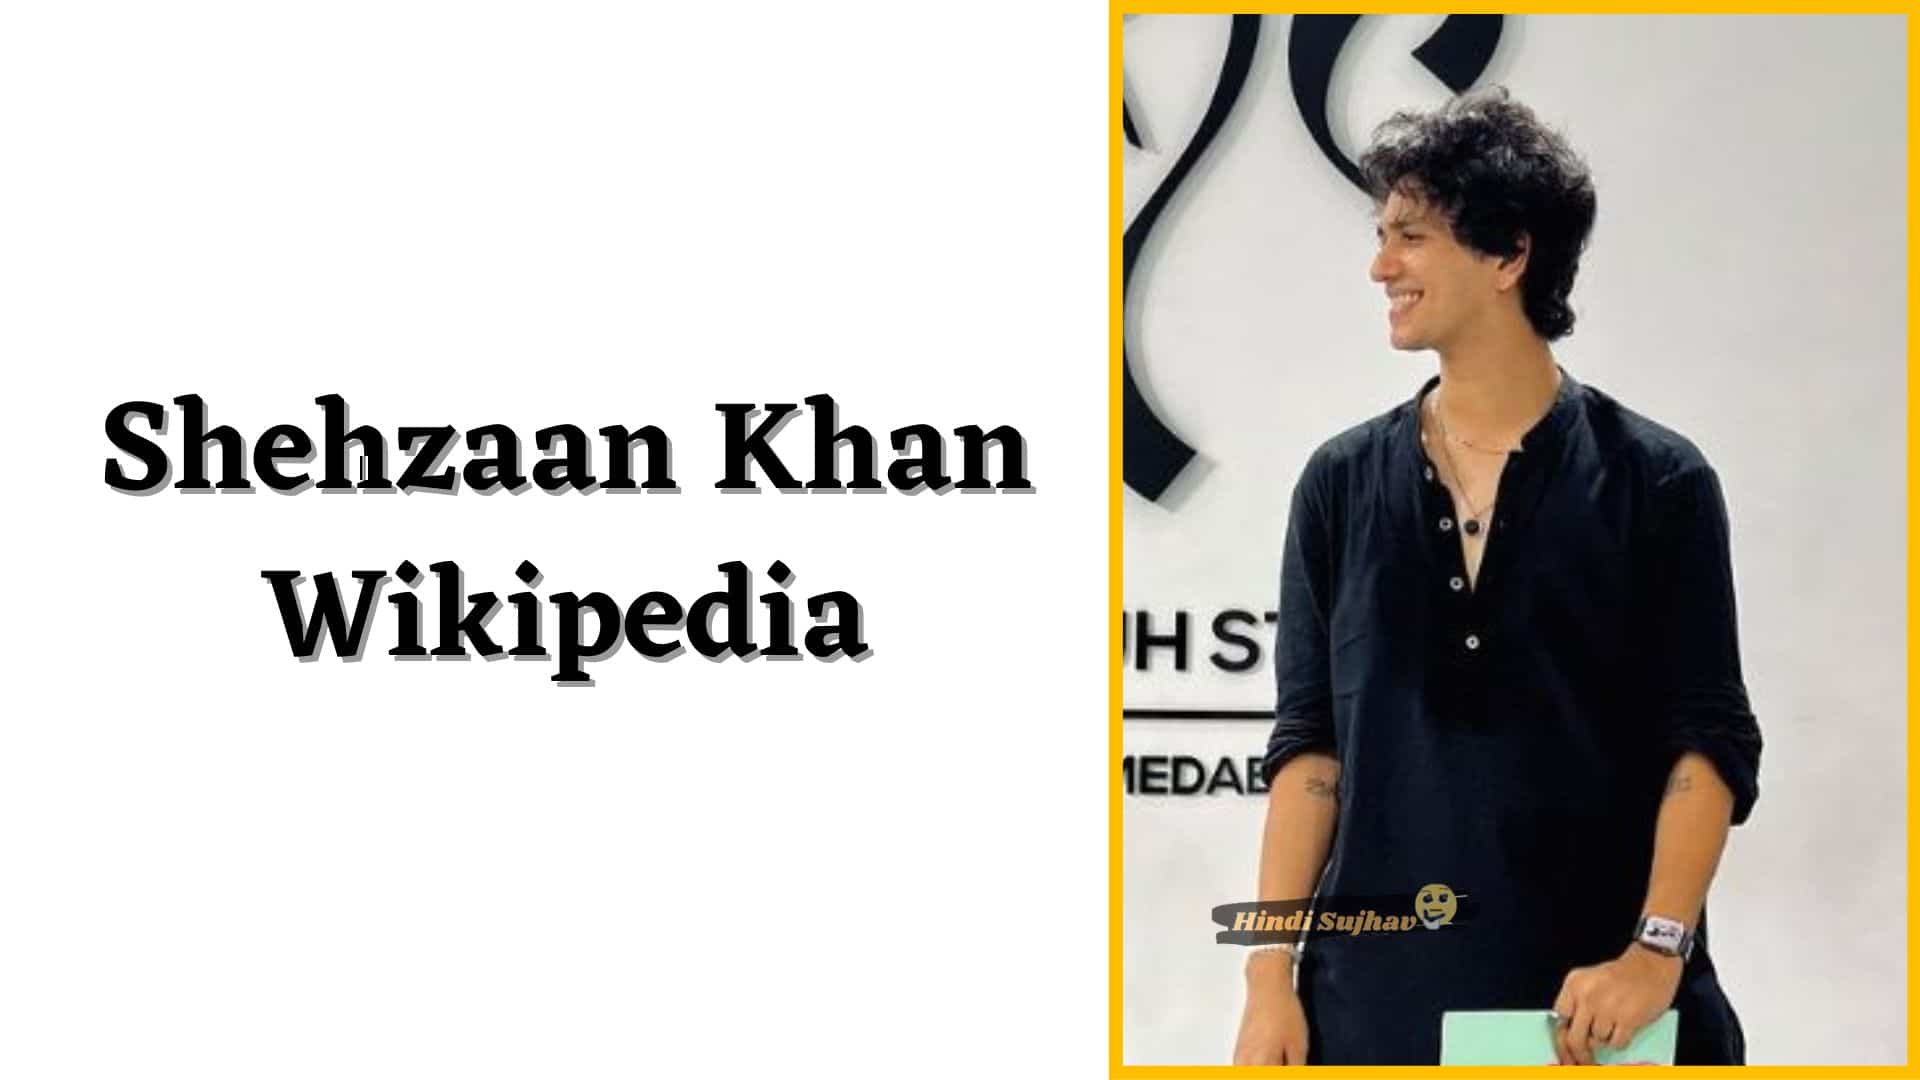 Shehzaan Khan Dancer Biography, Wiki, Wikipedia, Age, Girlfriend, Workshop, Birthday, Family, Wife